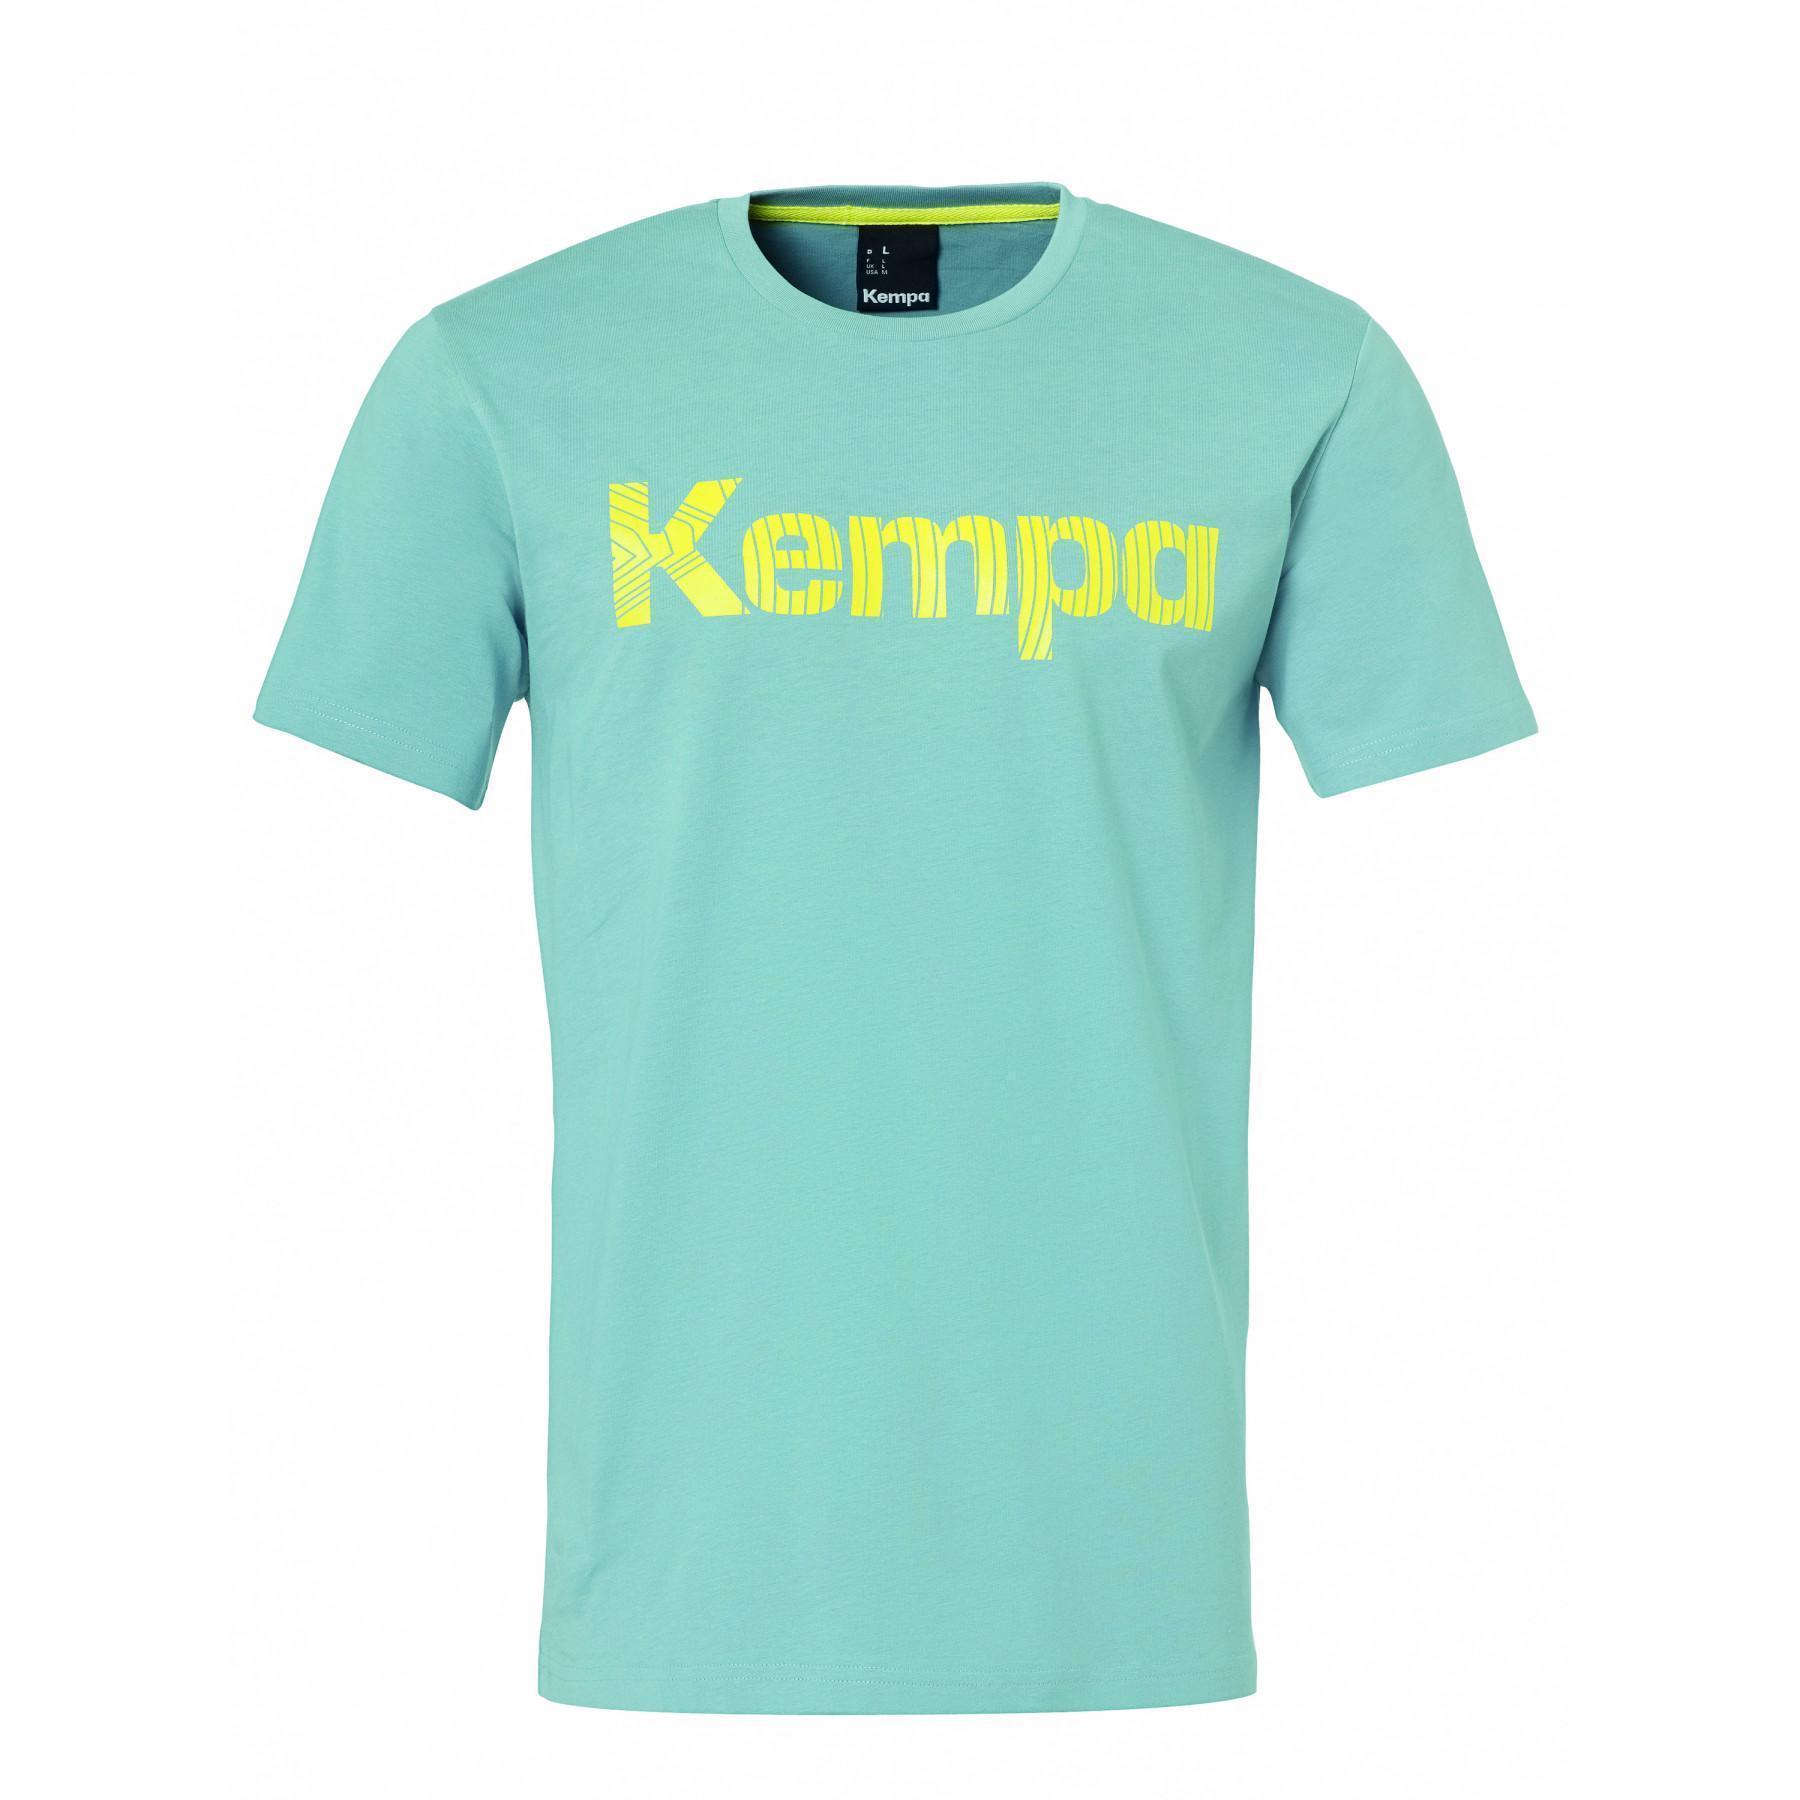 T-shirt enfant Graphic Kempa